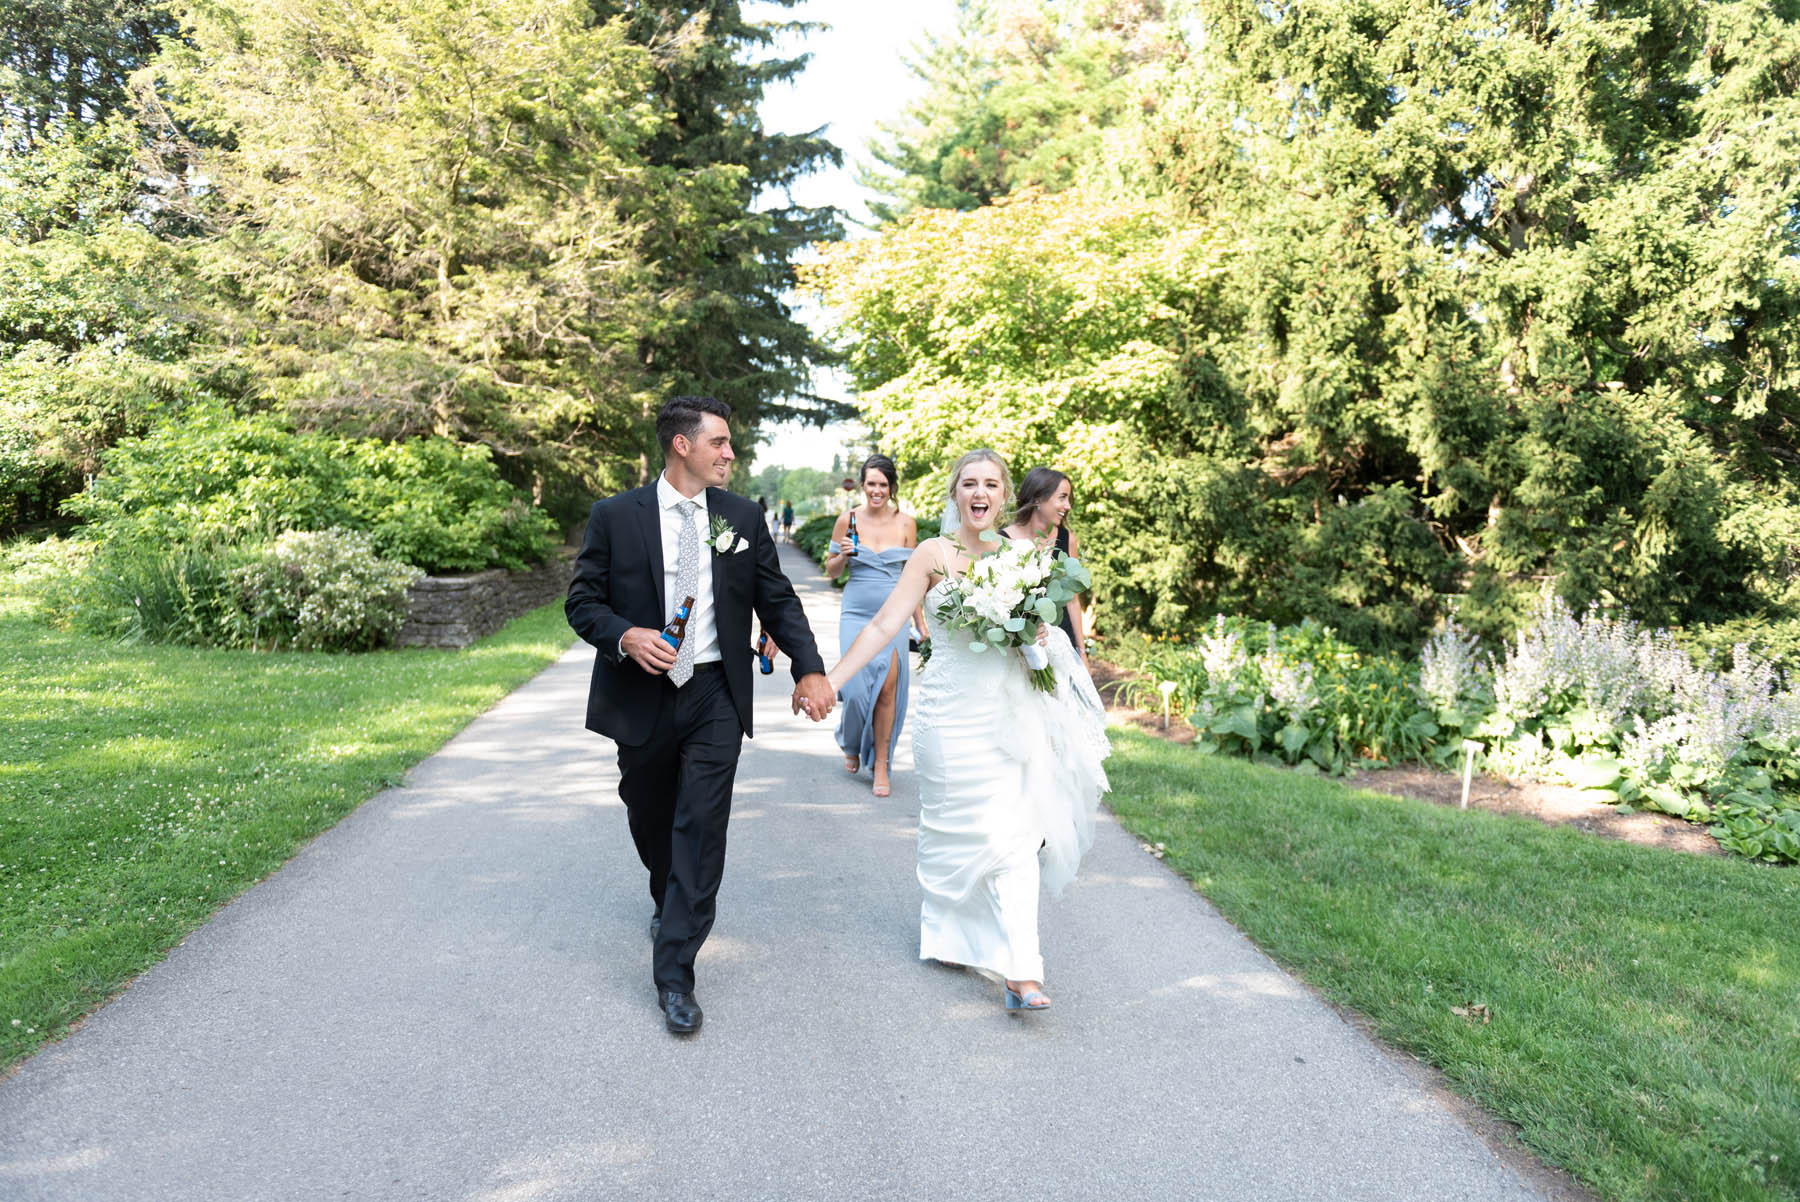 Captivating Wedding Moments Captured by Photographer - Allison + Mark